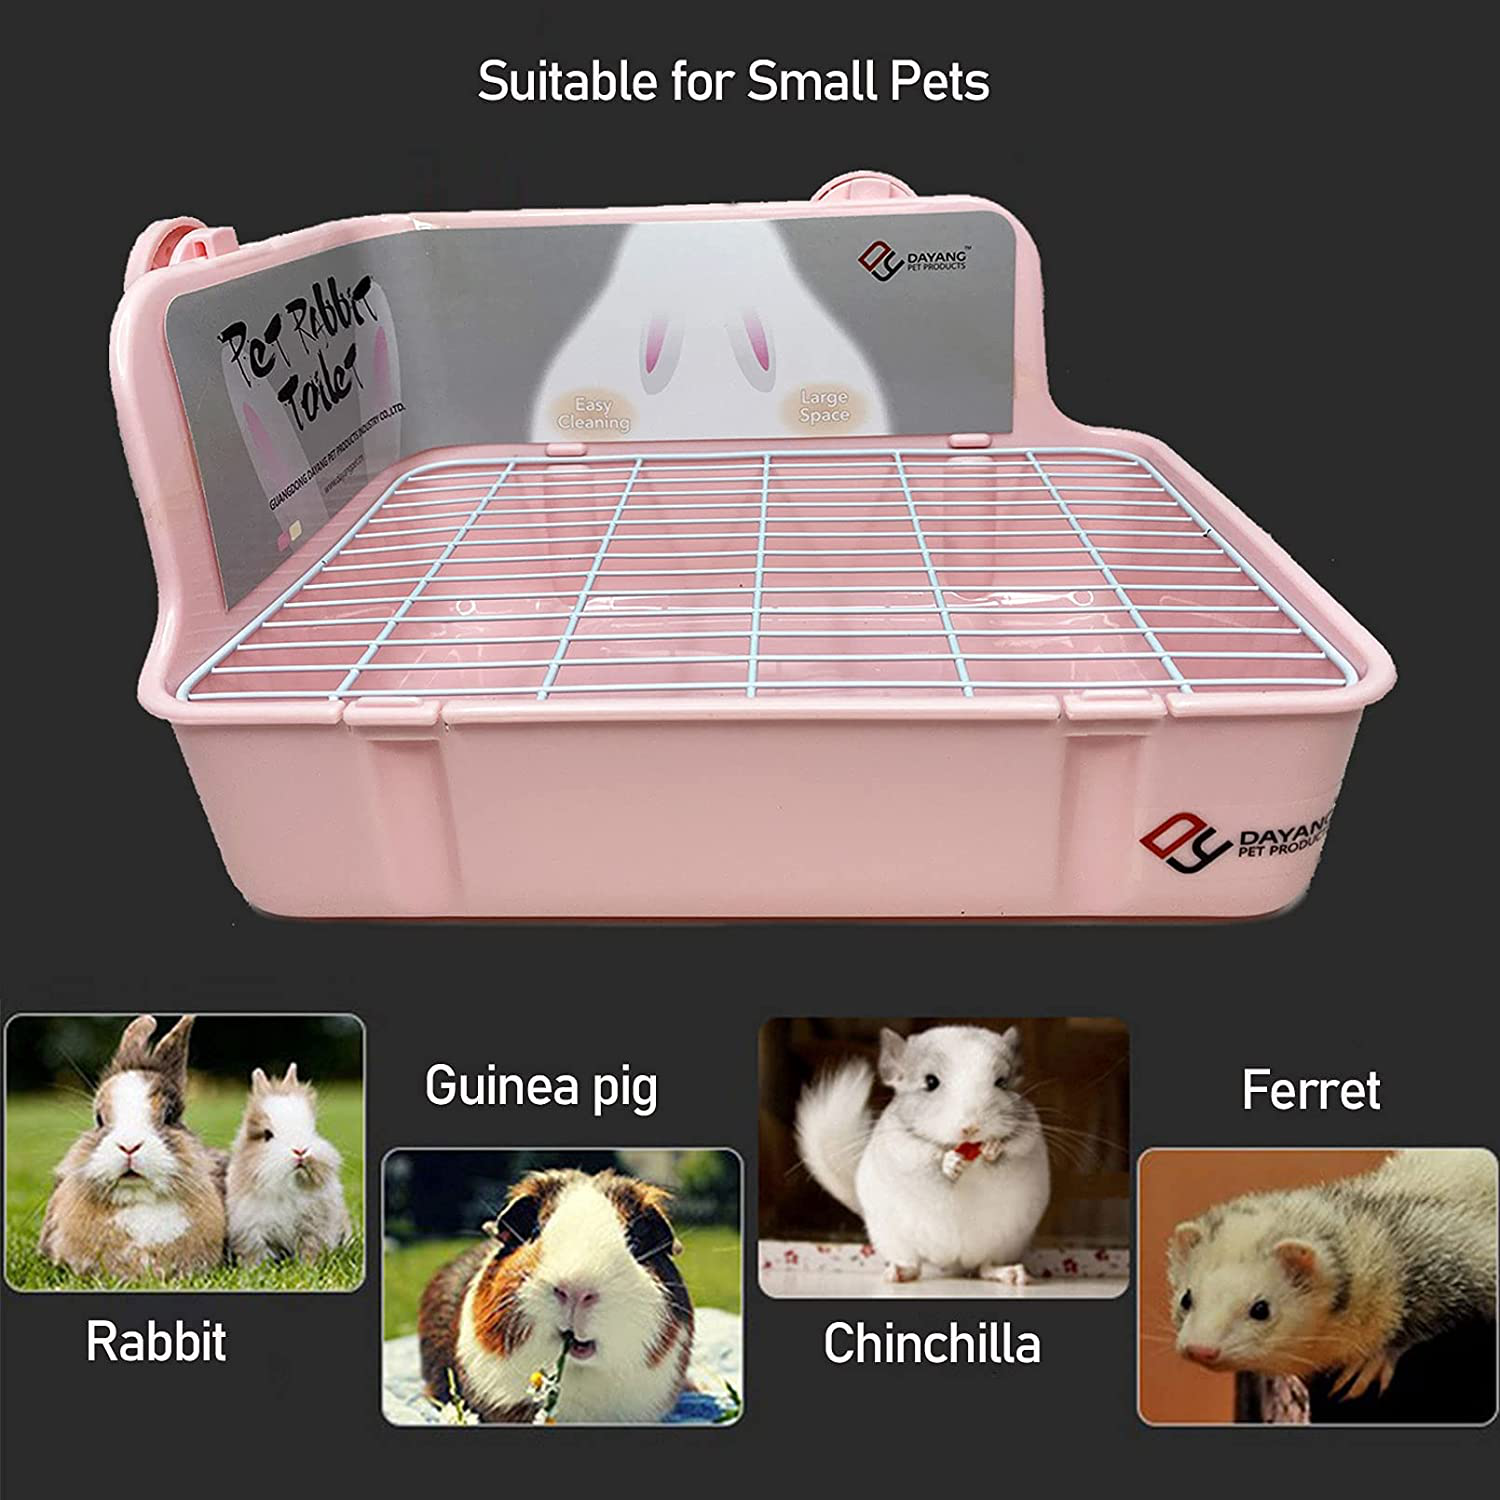 Kathson Rabbit Litter Box Toilet, Bunny Potty Trainer Corner Litter Pan Small Animal Disposable Liner Bedding Supplies for Guinea Pigs, Chinchilla, Ferret, Gerbil (Pink)